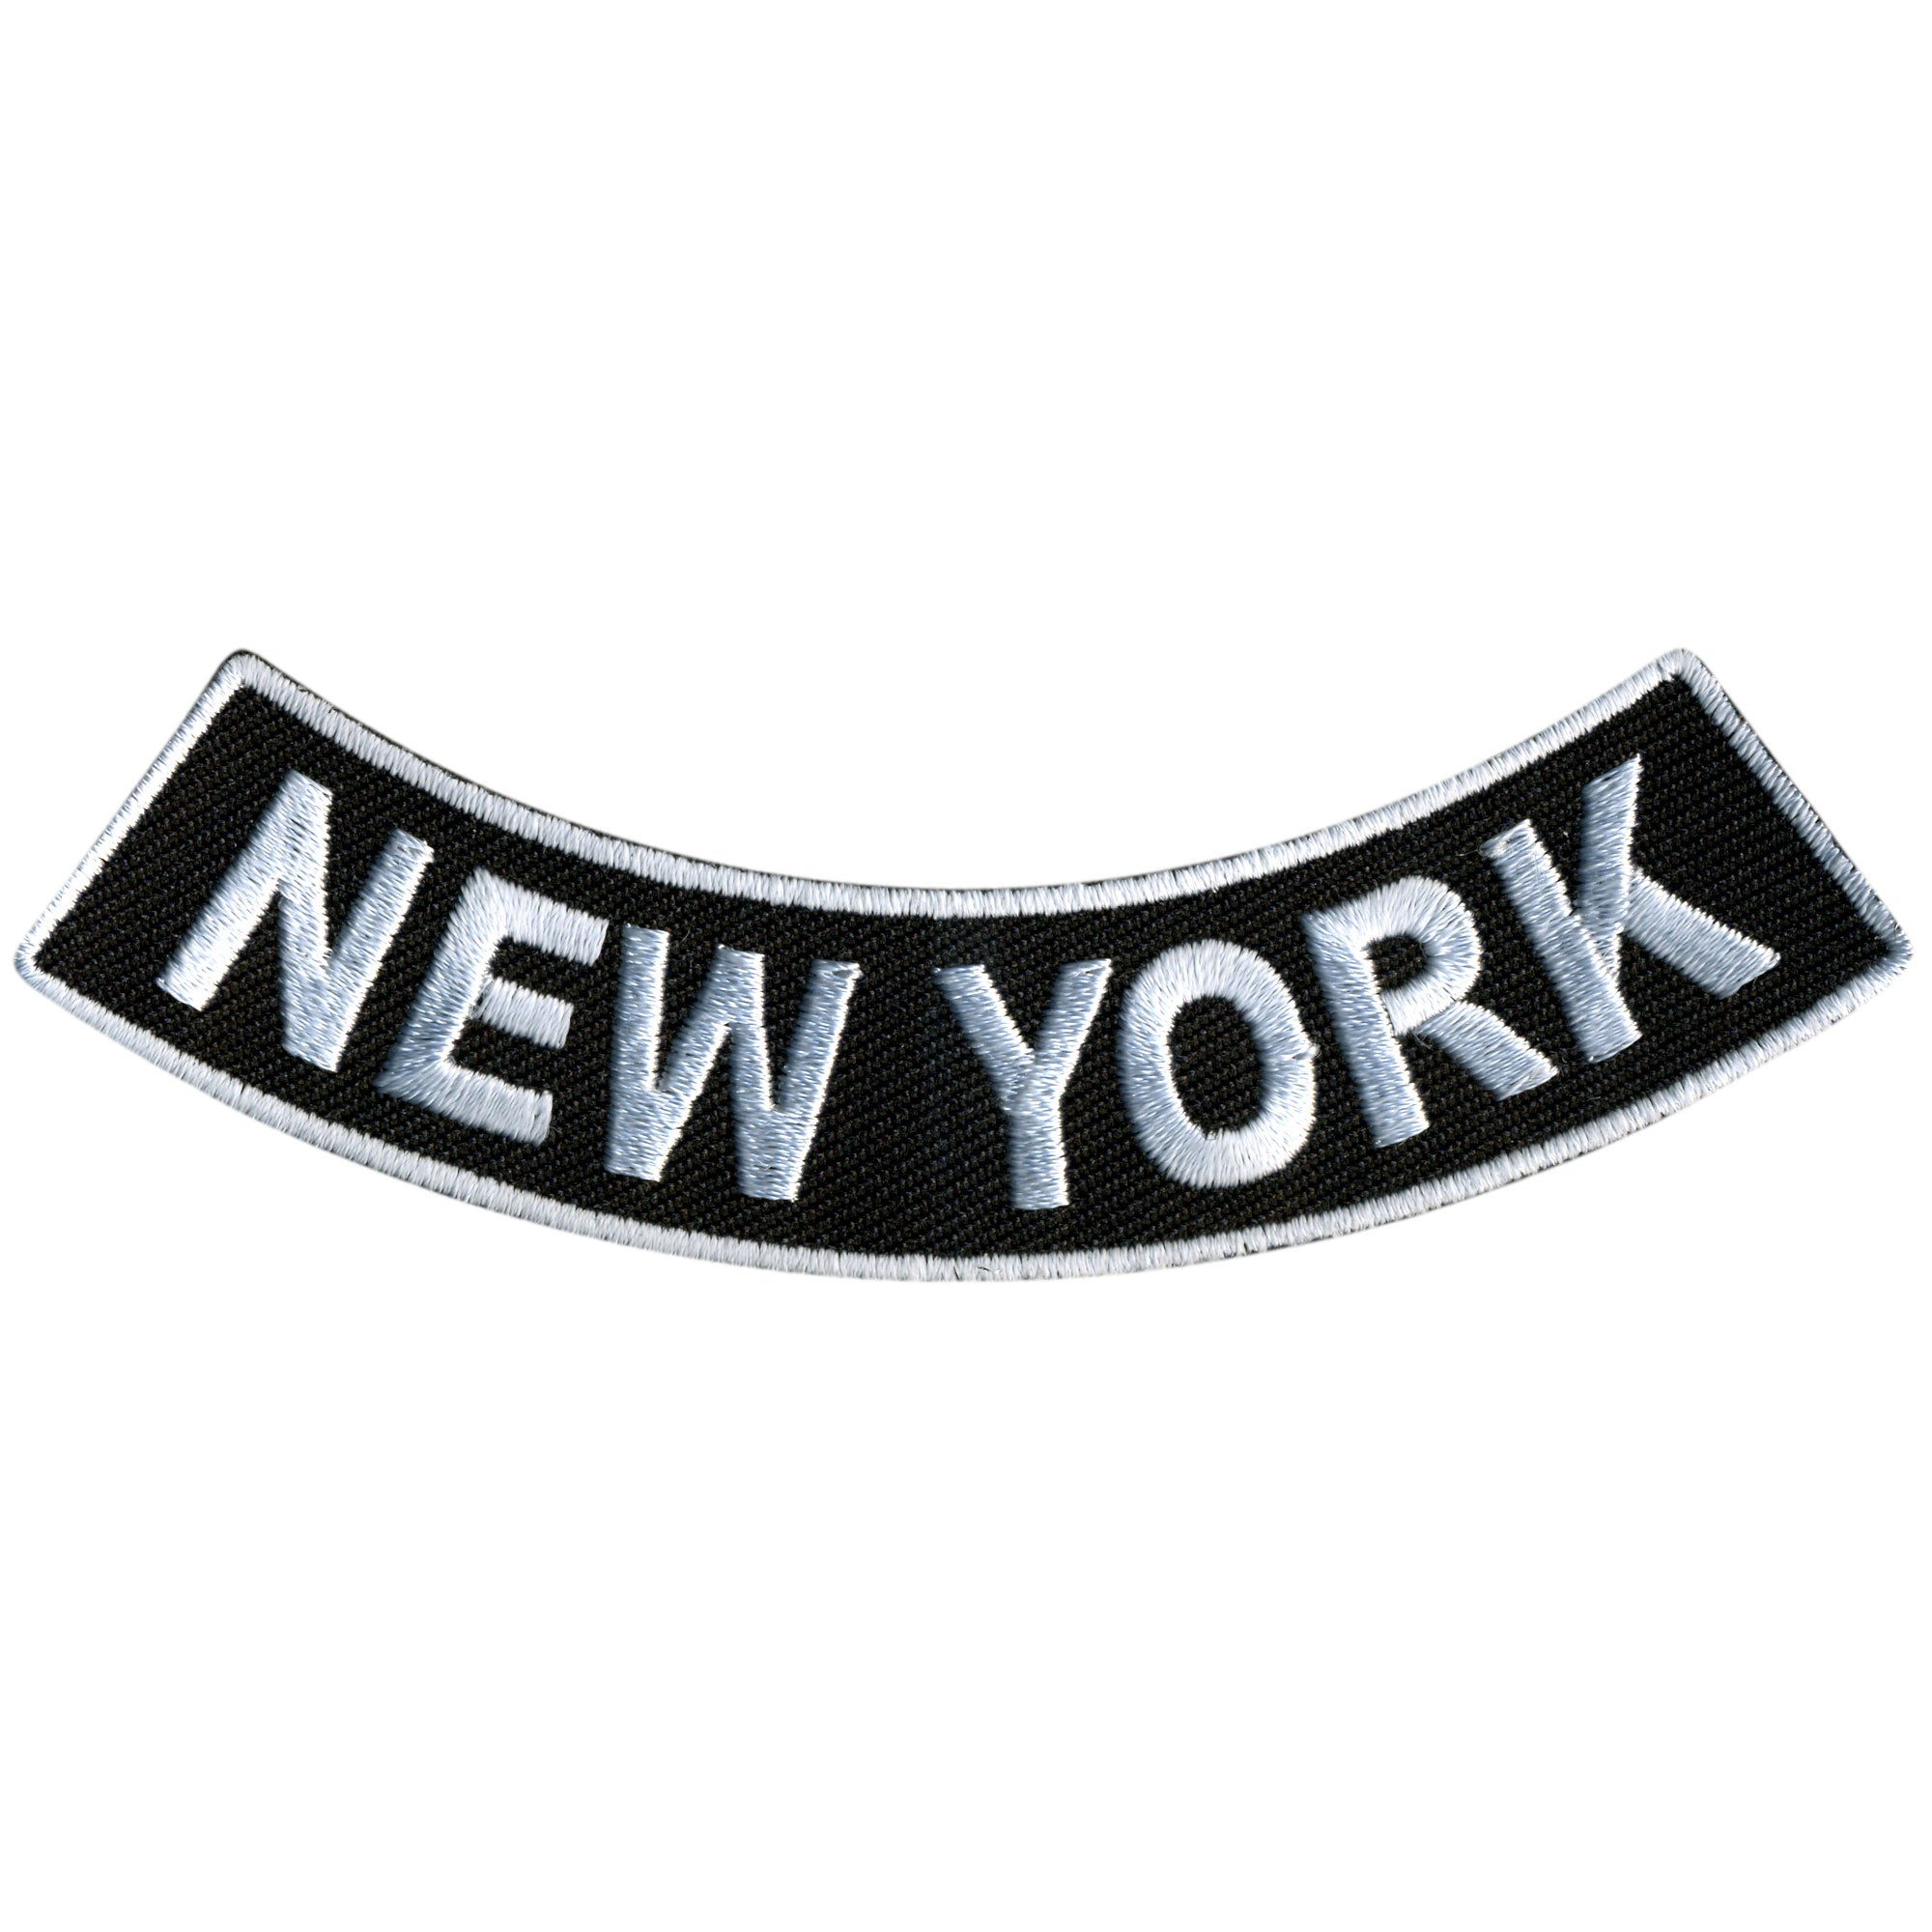 Hot Leathers New York 4” X 1” Bottom Rocker Patch